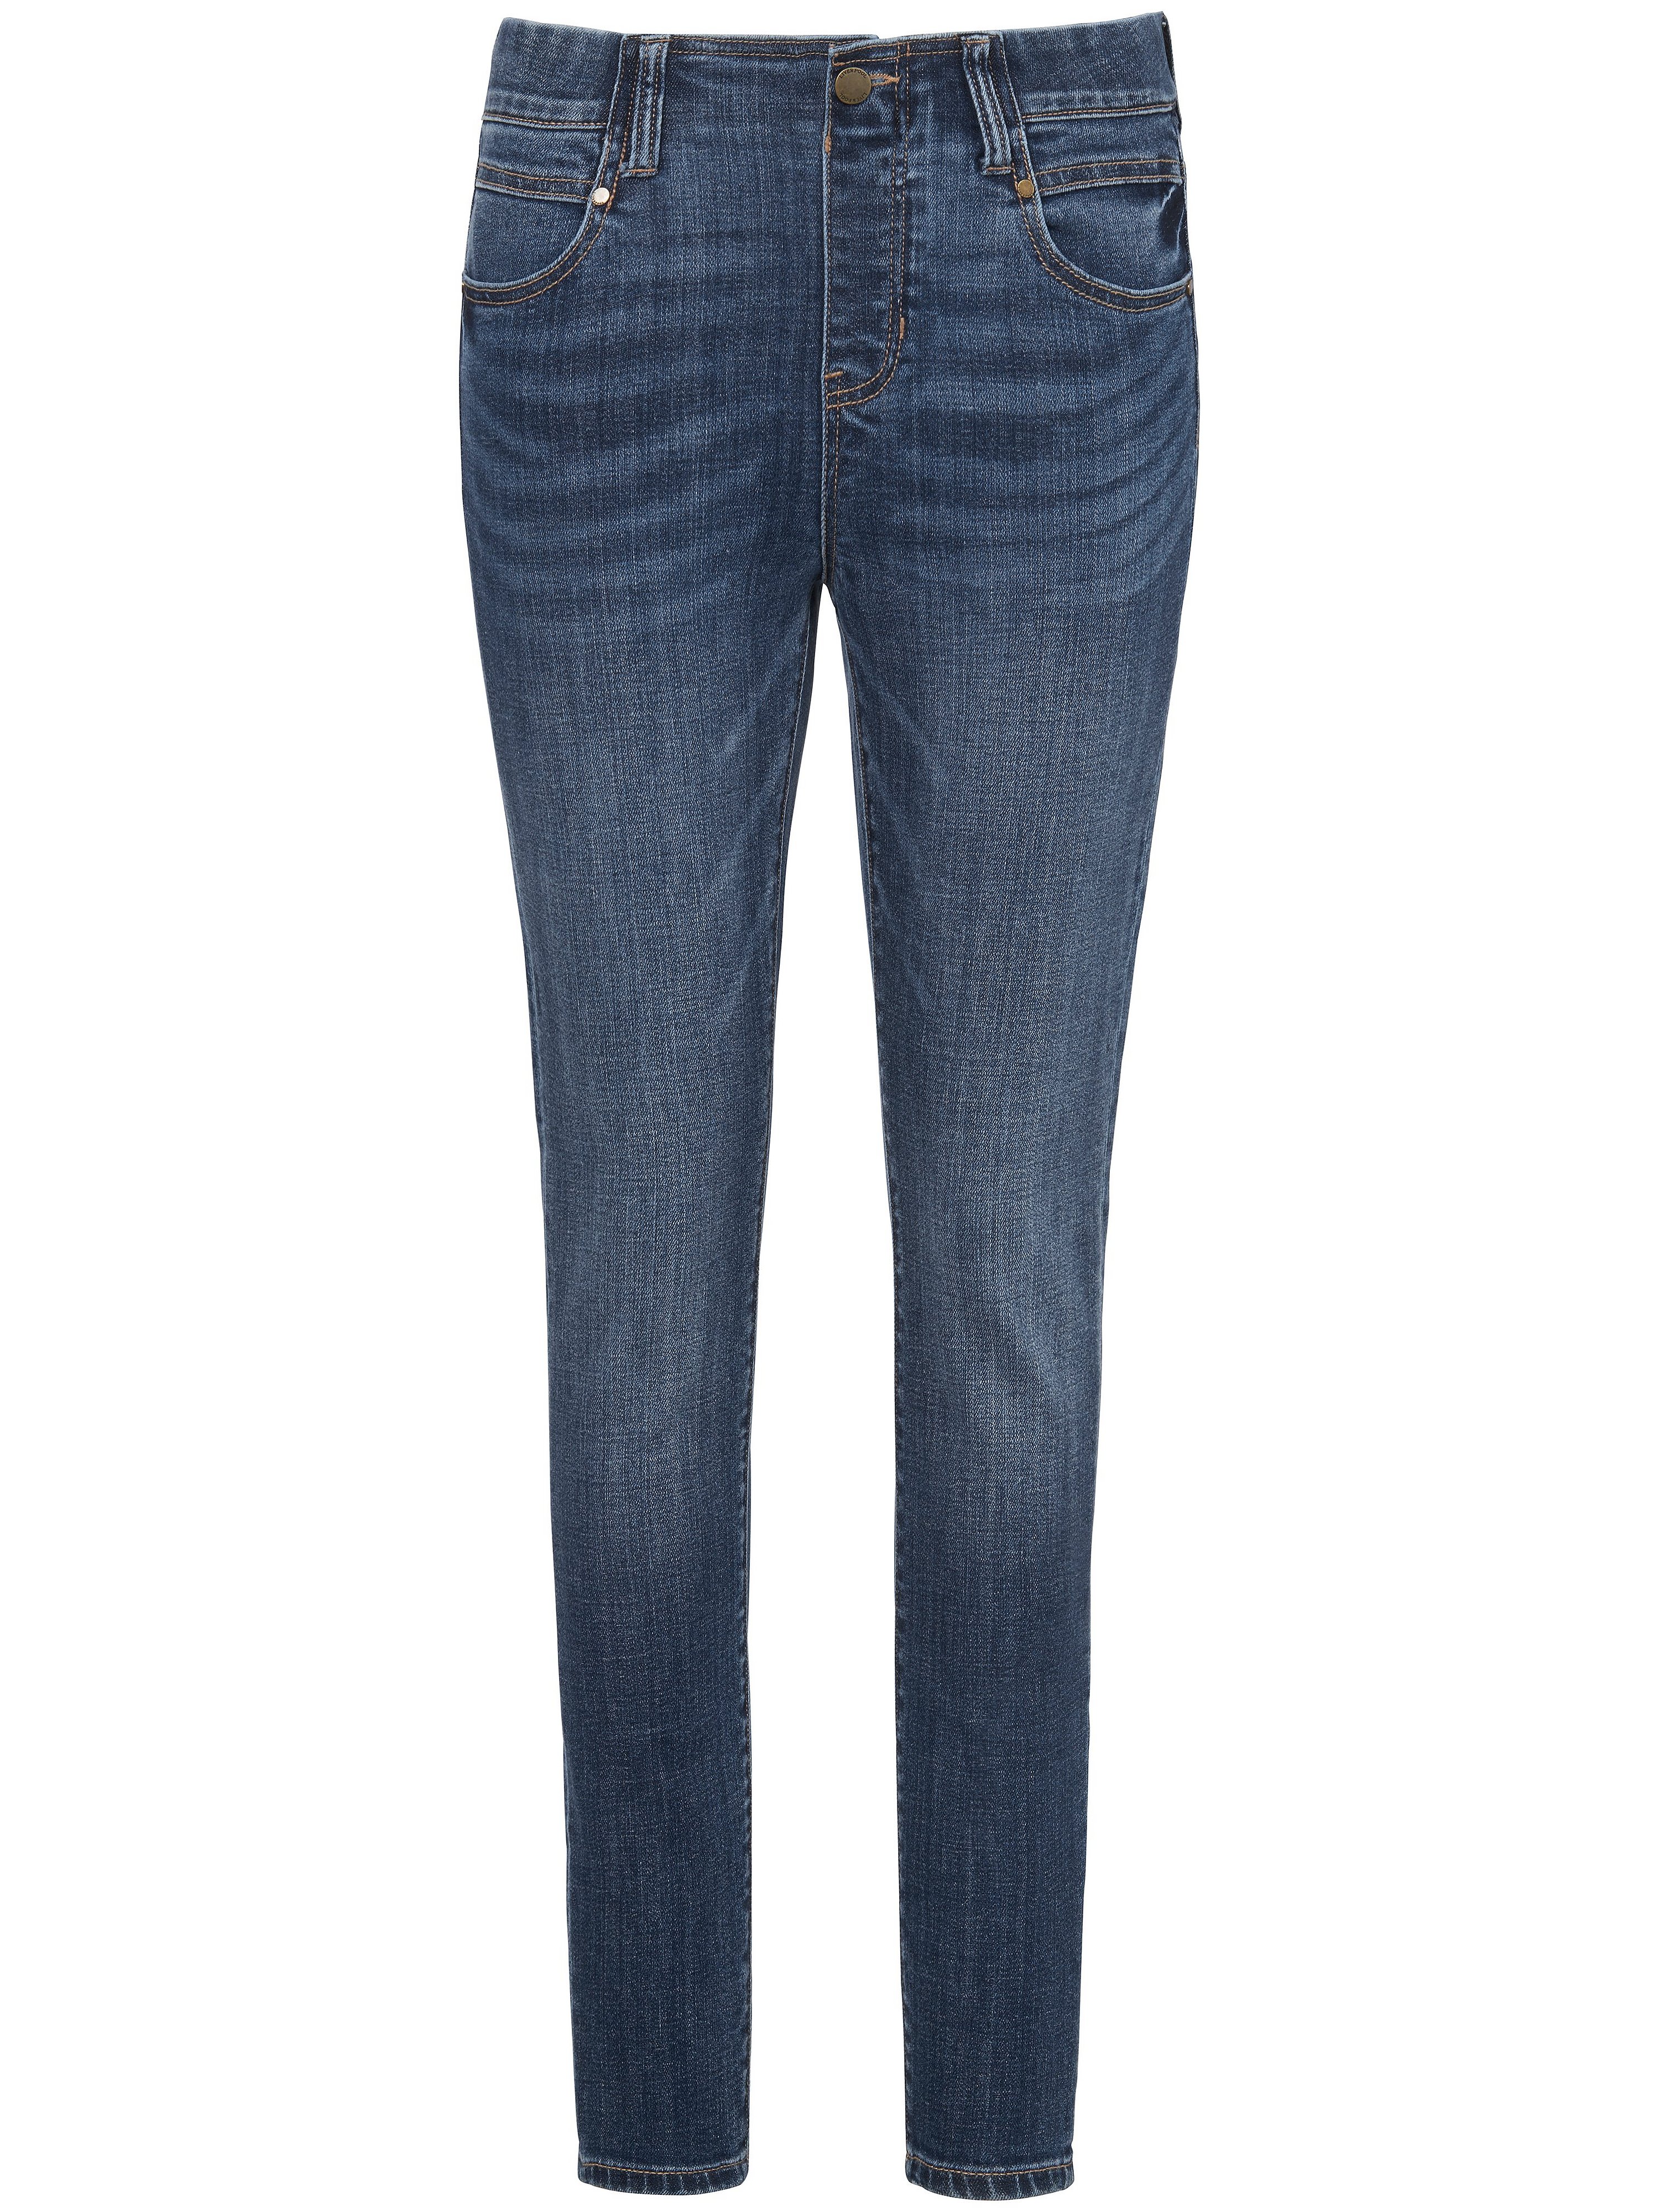 Jeans model Gia Glider Skinny Van LIVERPOOL denim